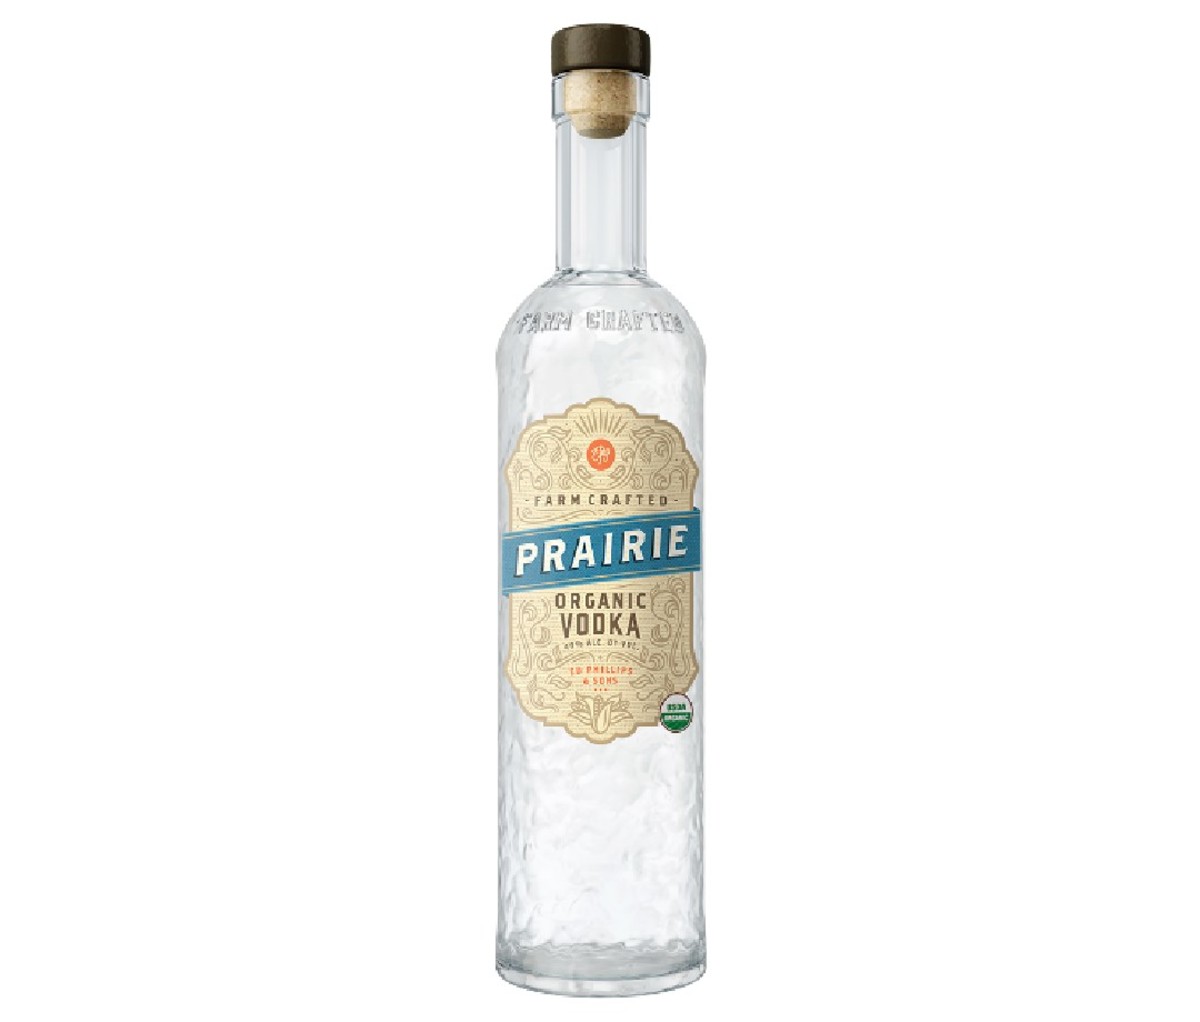 A bottle of Prairie Vodka